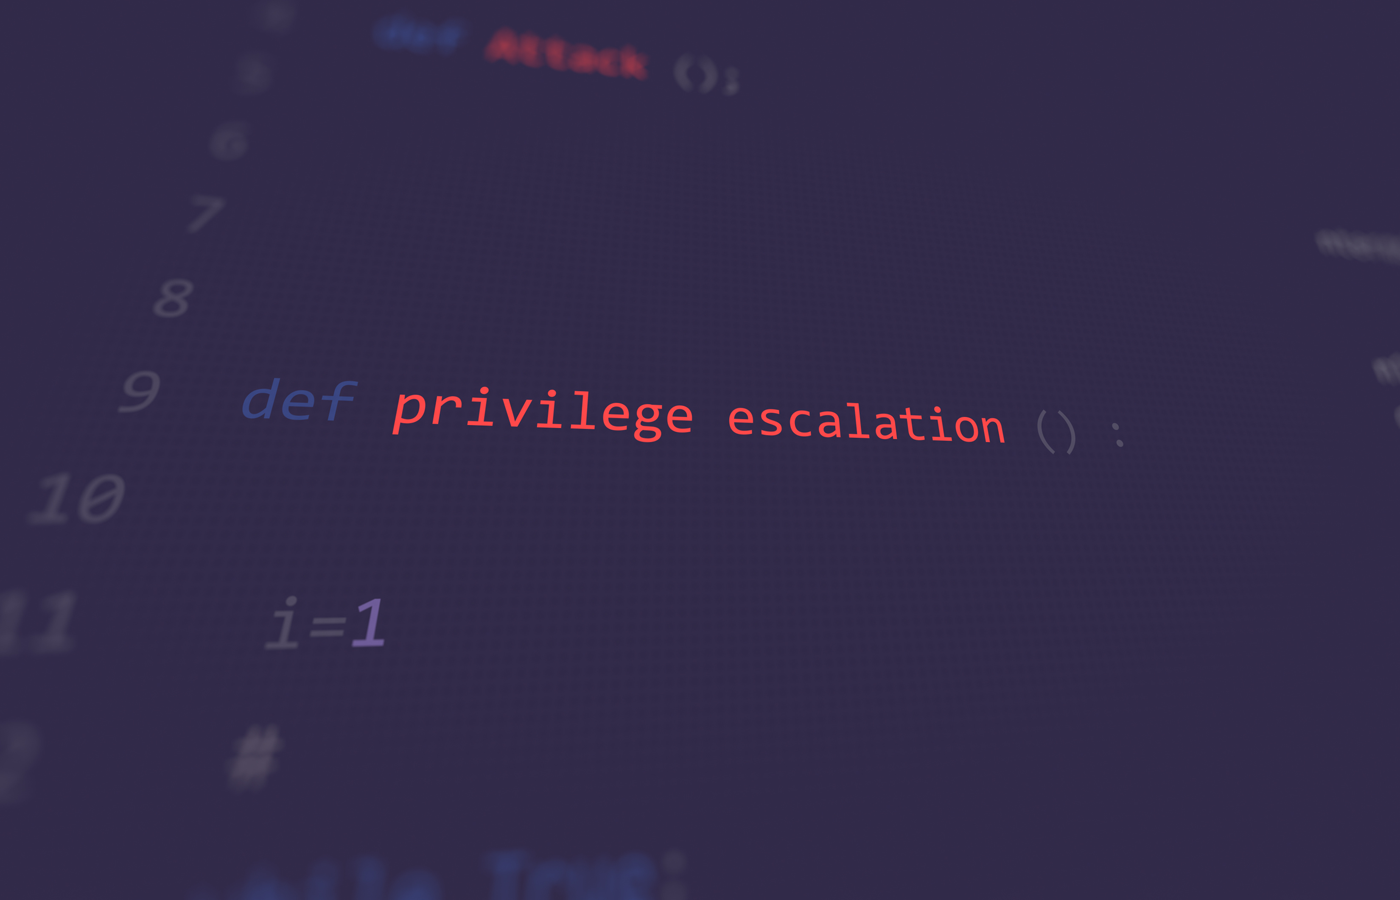 Cyber attack privilege escalation vulnerability in text ASCII art style, code on editor screen.